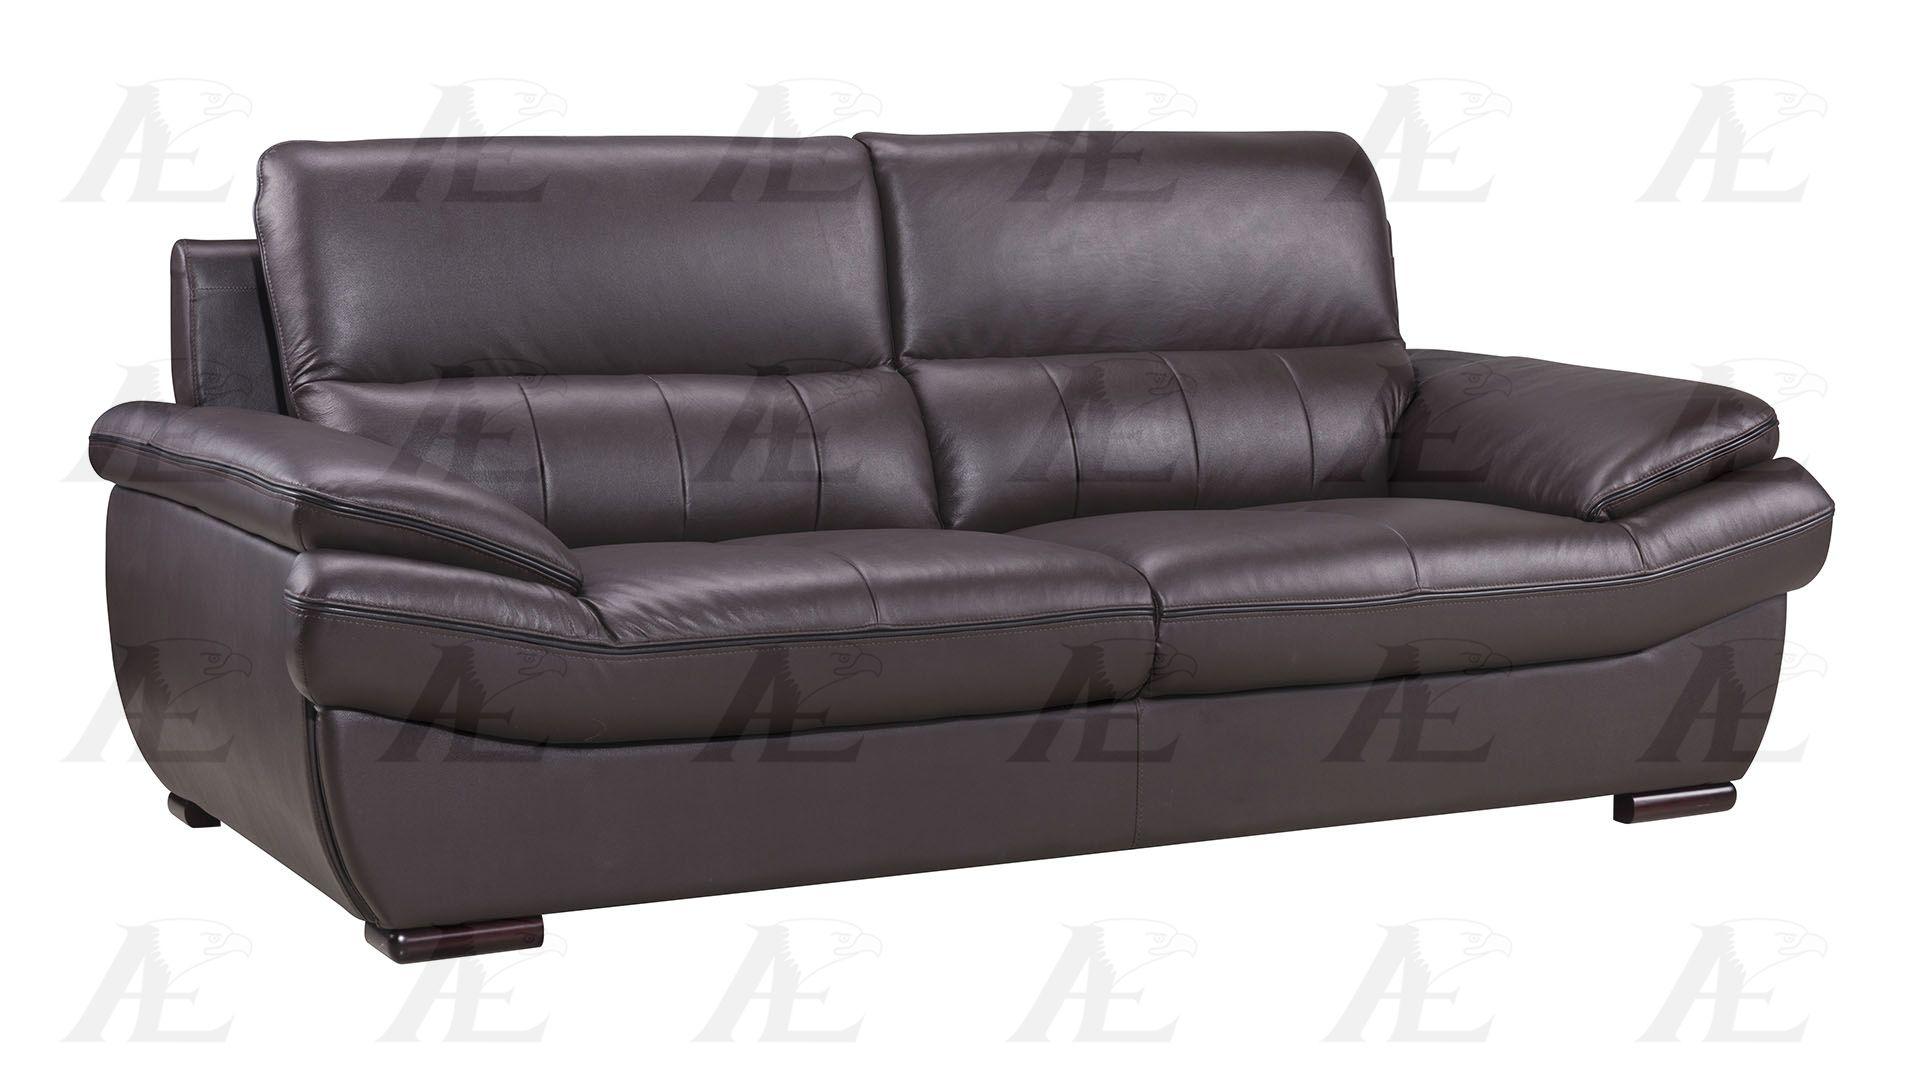 

    
American Eagle EK-B305 Dark Chocolate Genuine Leather Living Room Sofa Set 3pcs in Contemporary Style
